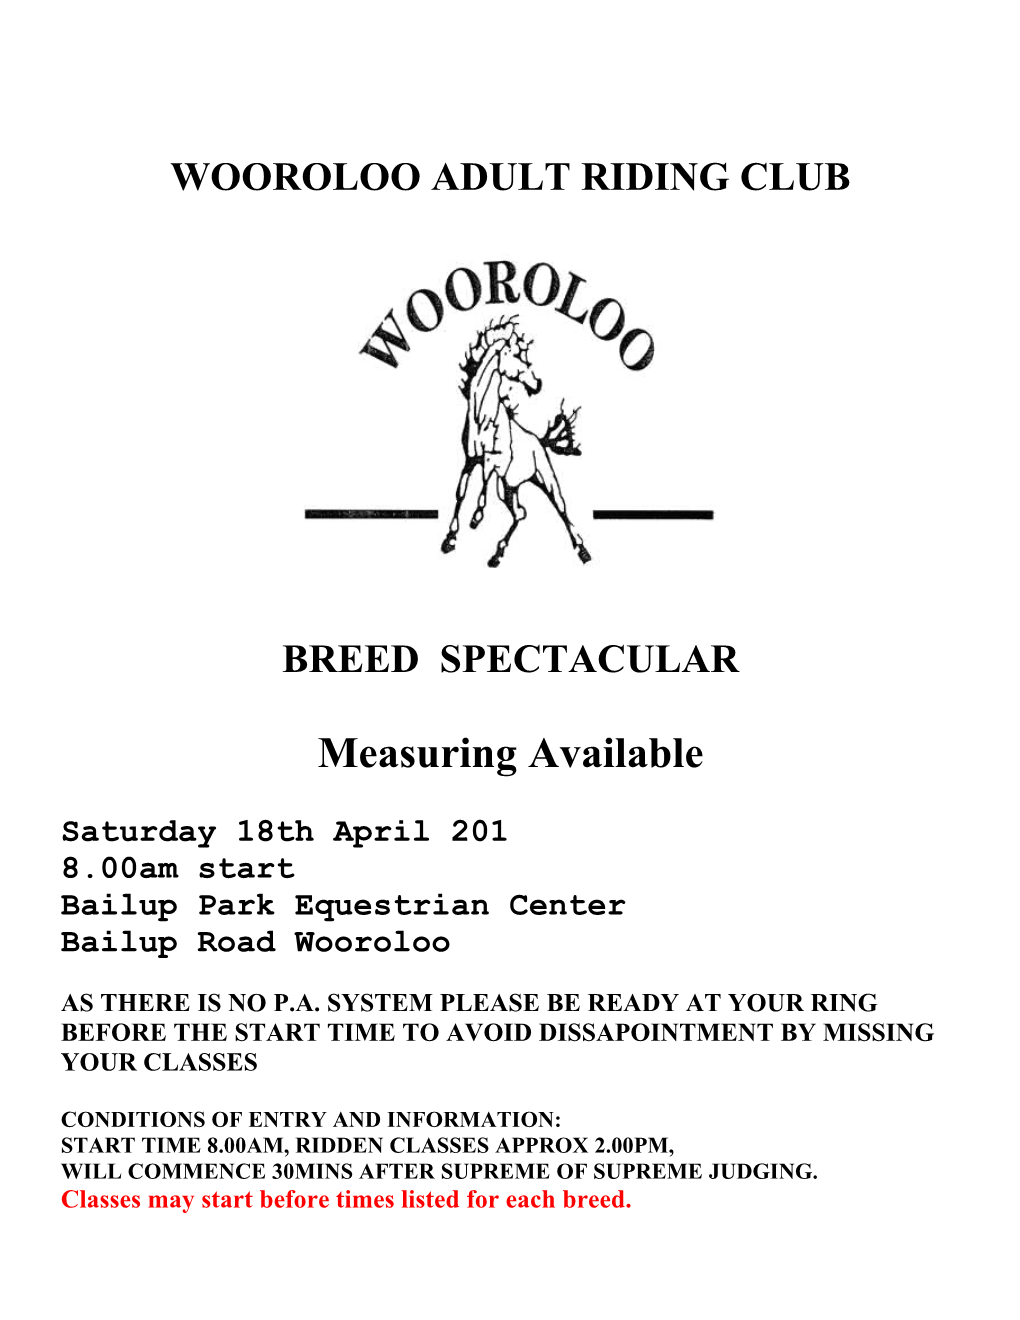 Wooroloo Adult Riding Club